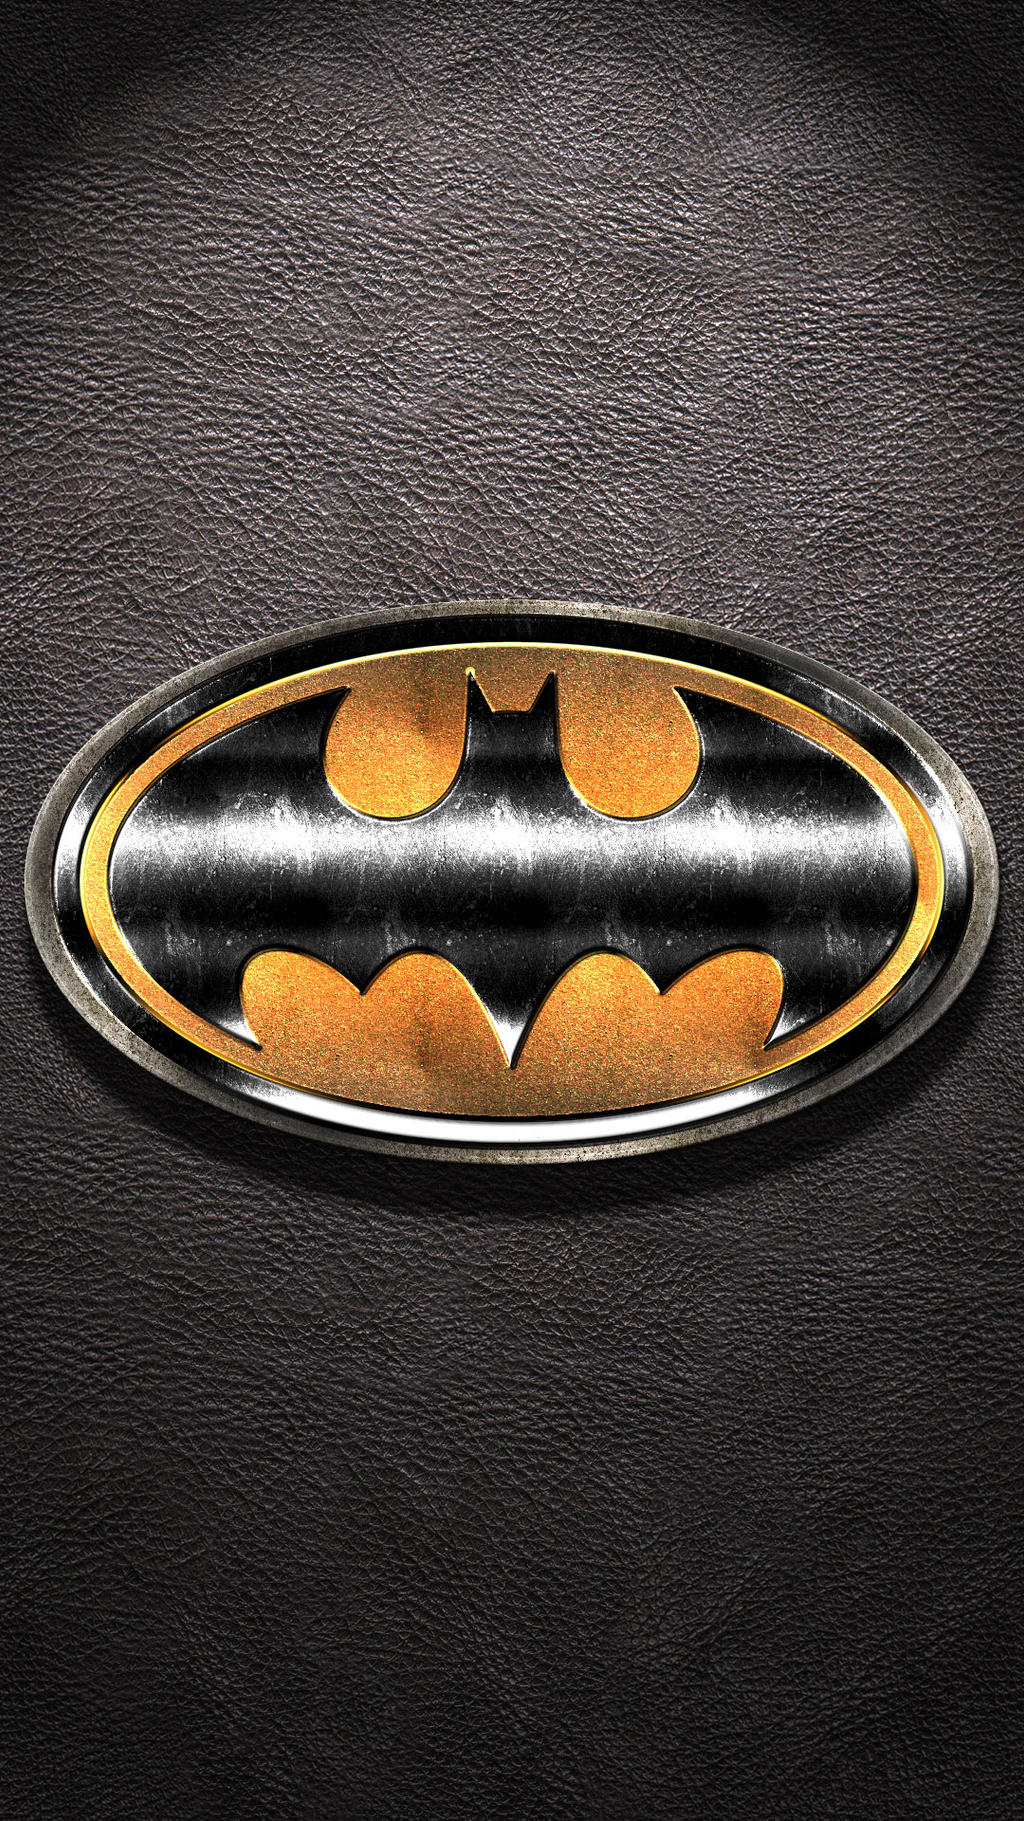 Batman-phone-wallpaper by Balsavor on